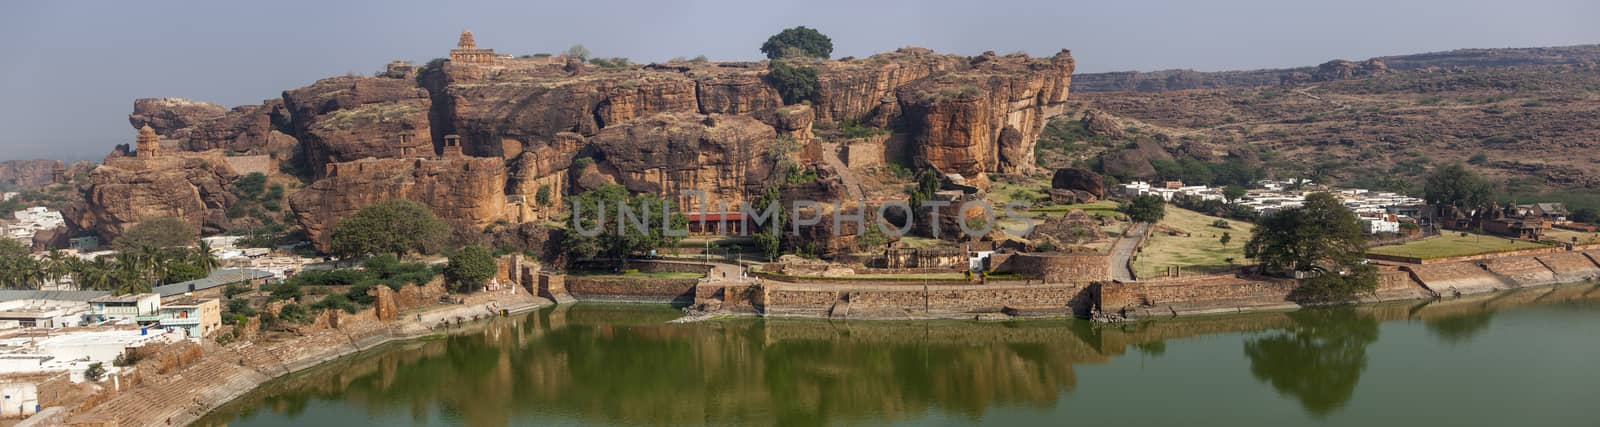 Panoramic photo from rock carved temples, artifial lake and city at Badami, Karnataka, India